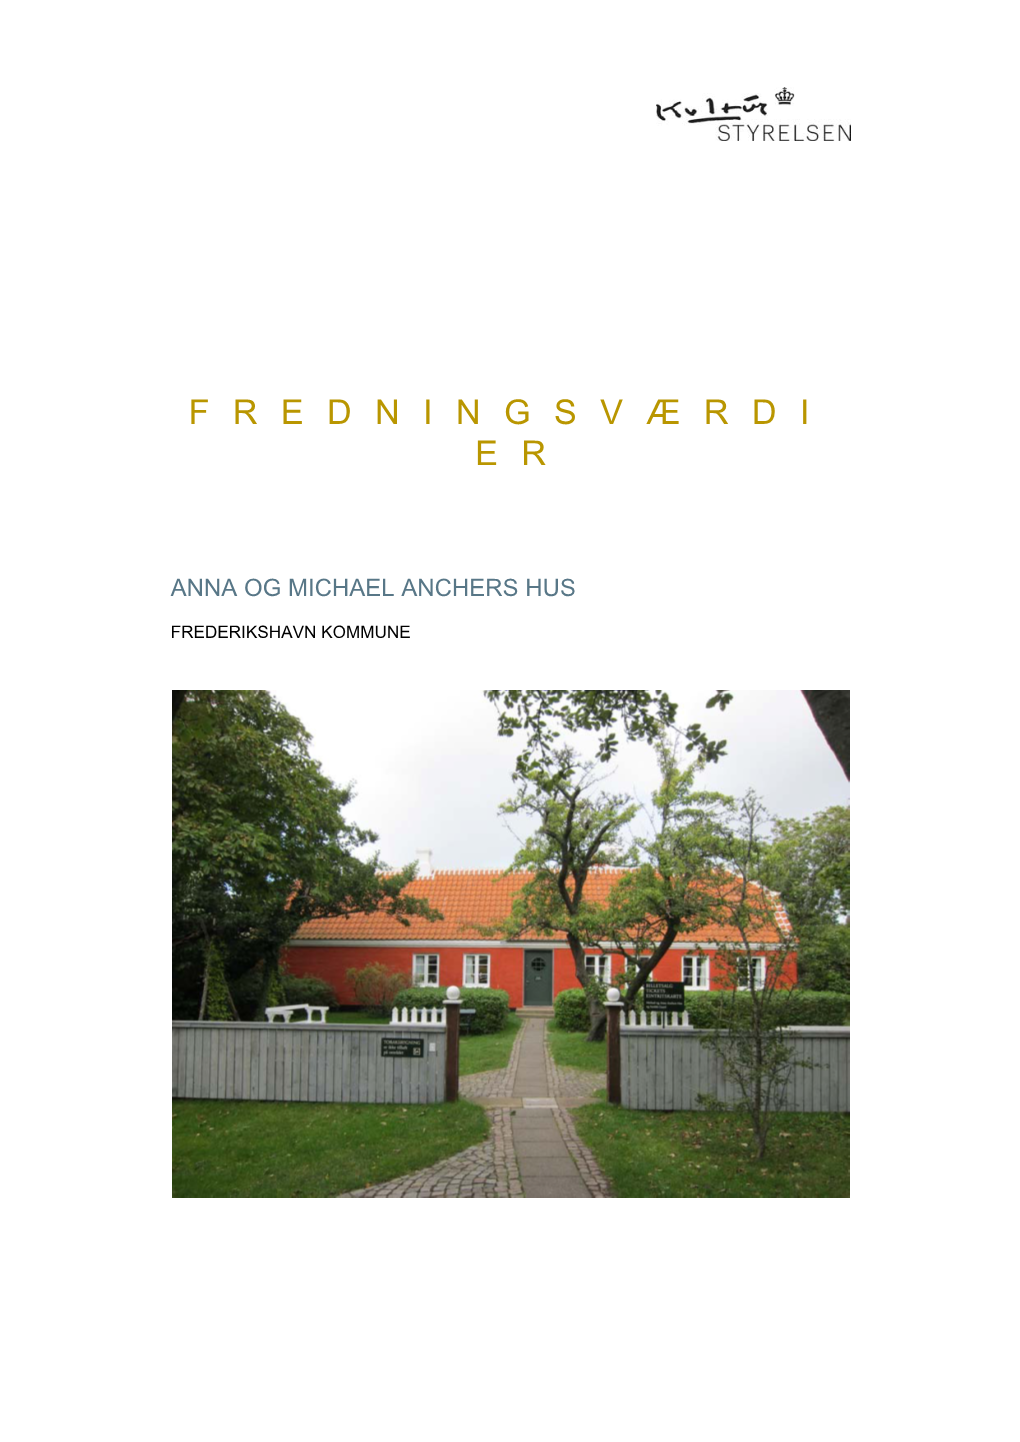 Markvej 2, Anna Og Michael Anchers Hus, Skagen, Fredningsbeskrivelse